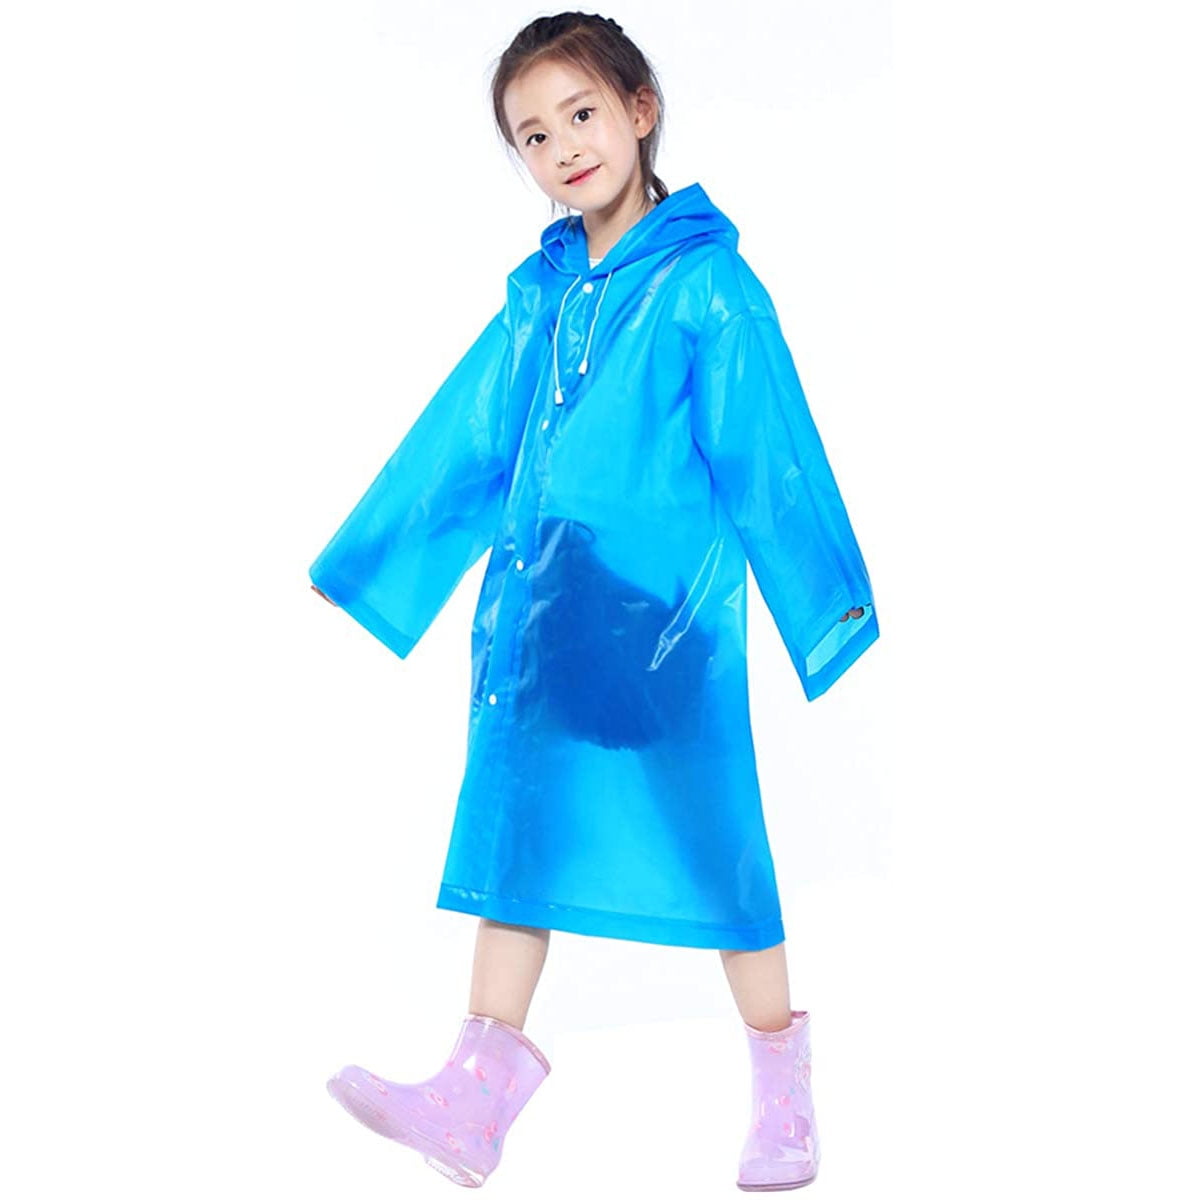 Transparent Raincoat Girls Rain Coat Hooded Outdoors Clear Waterproof Kids Girls Toddler Childrens Rain Jacket Rainwear